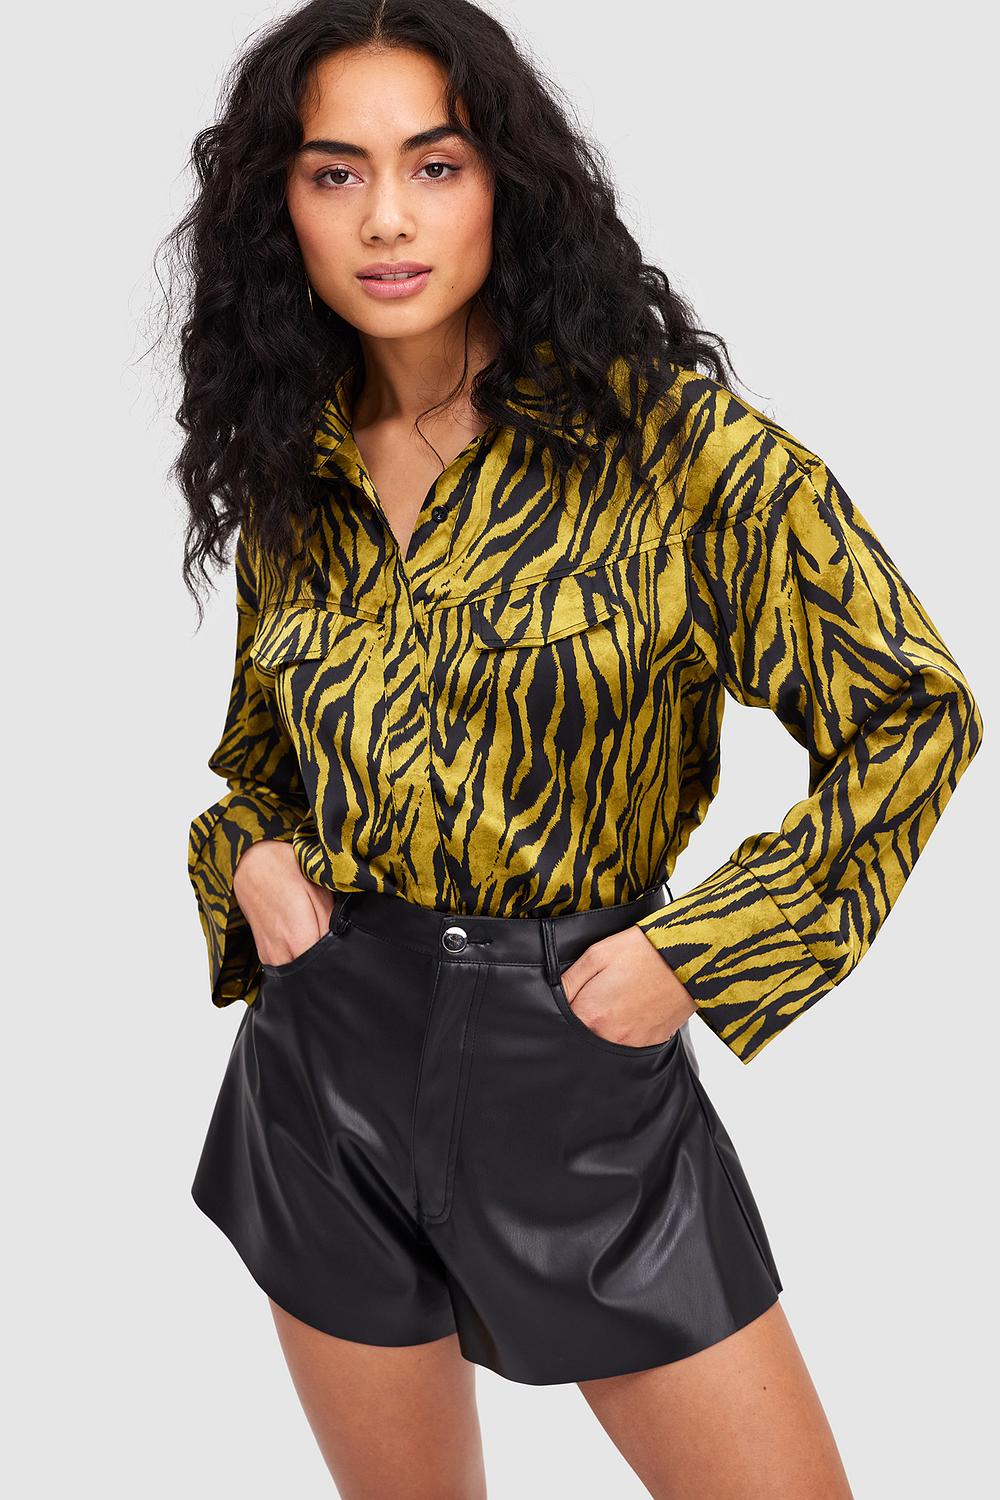 Black blouse with zebra print